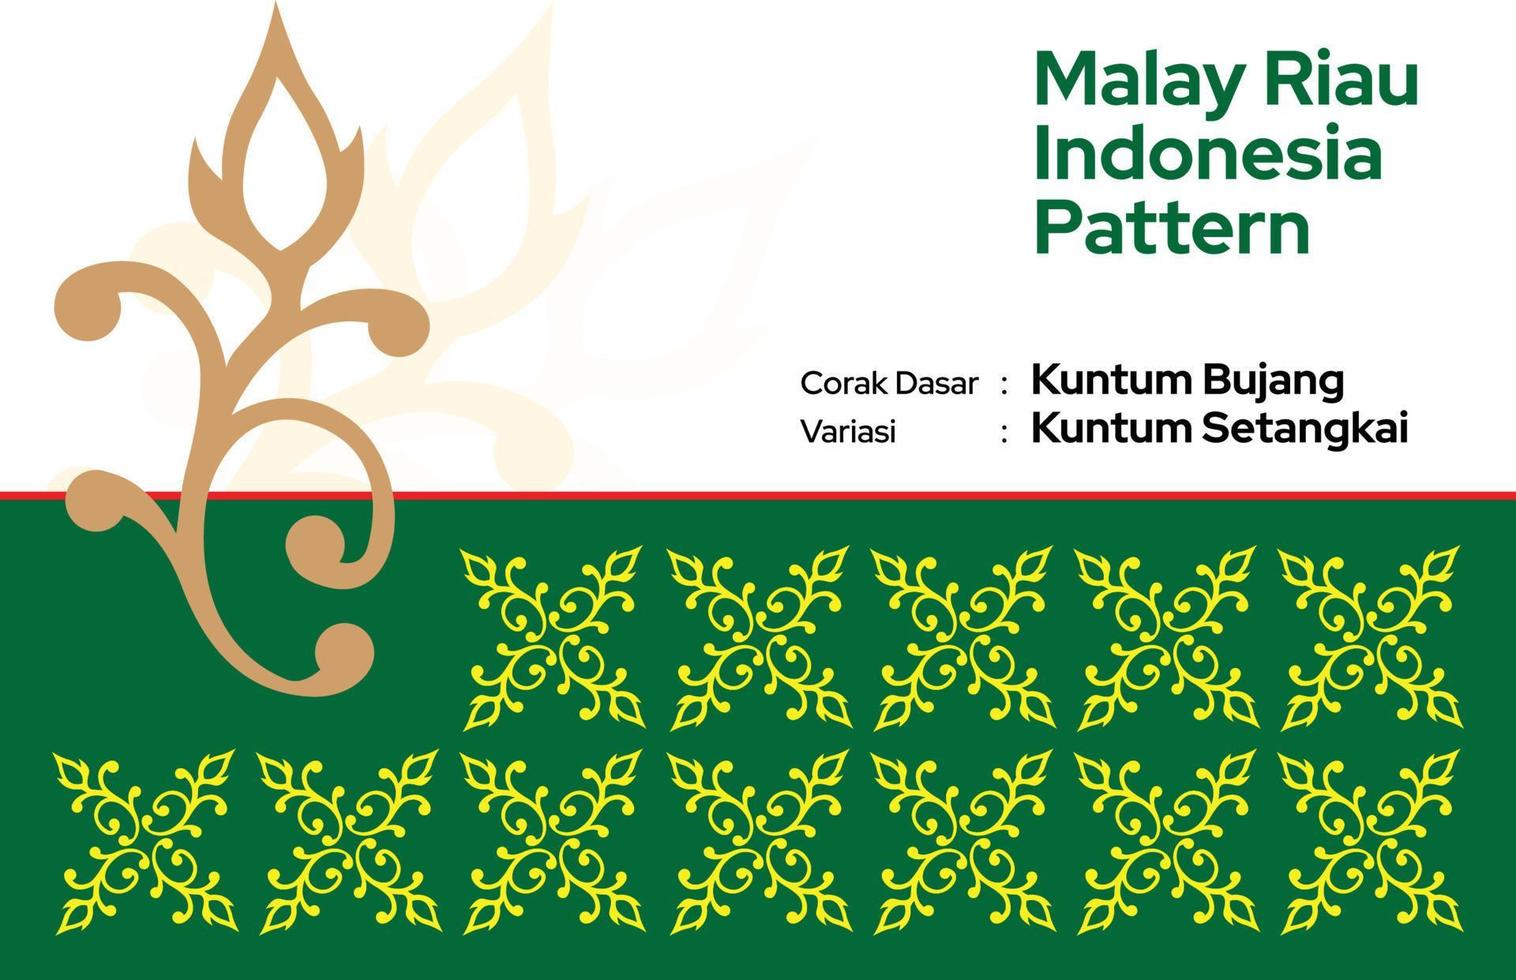 Pattern Malay Riau Batik Songket Tenun, Weaving Motif Corak dan ragi Kuntum Bujang Setangkai Melayu vector